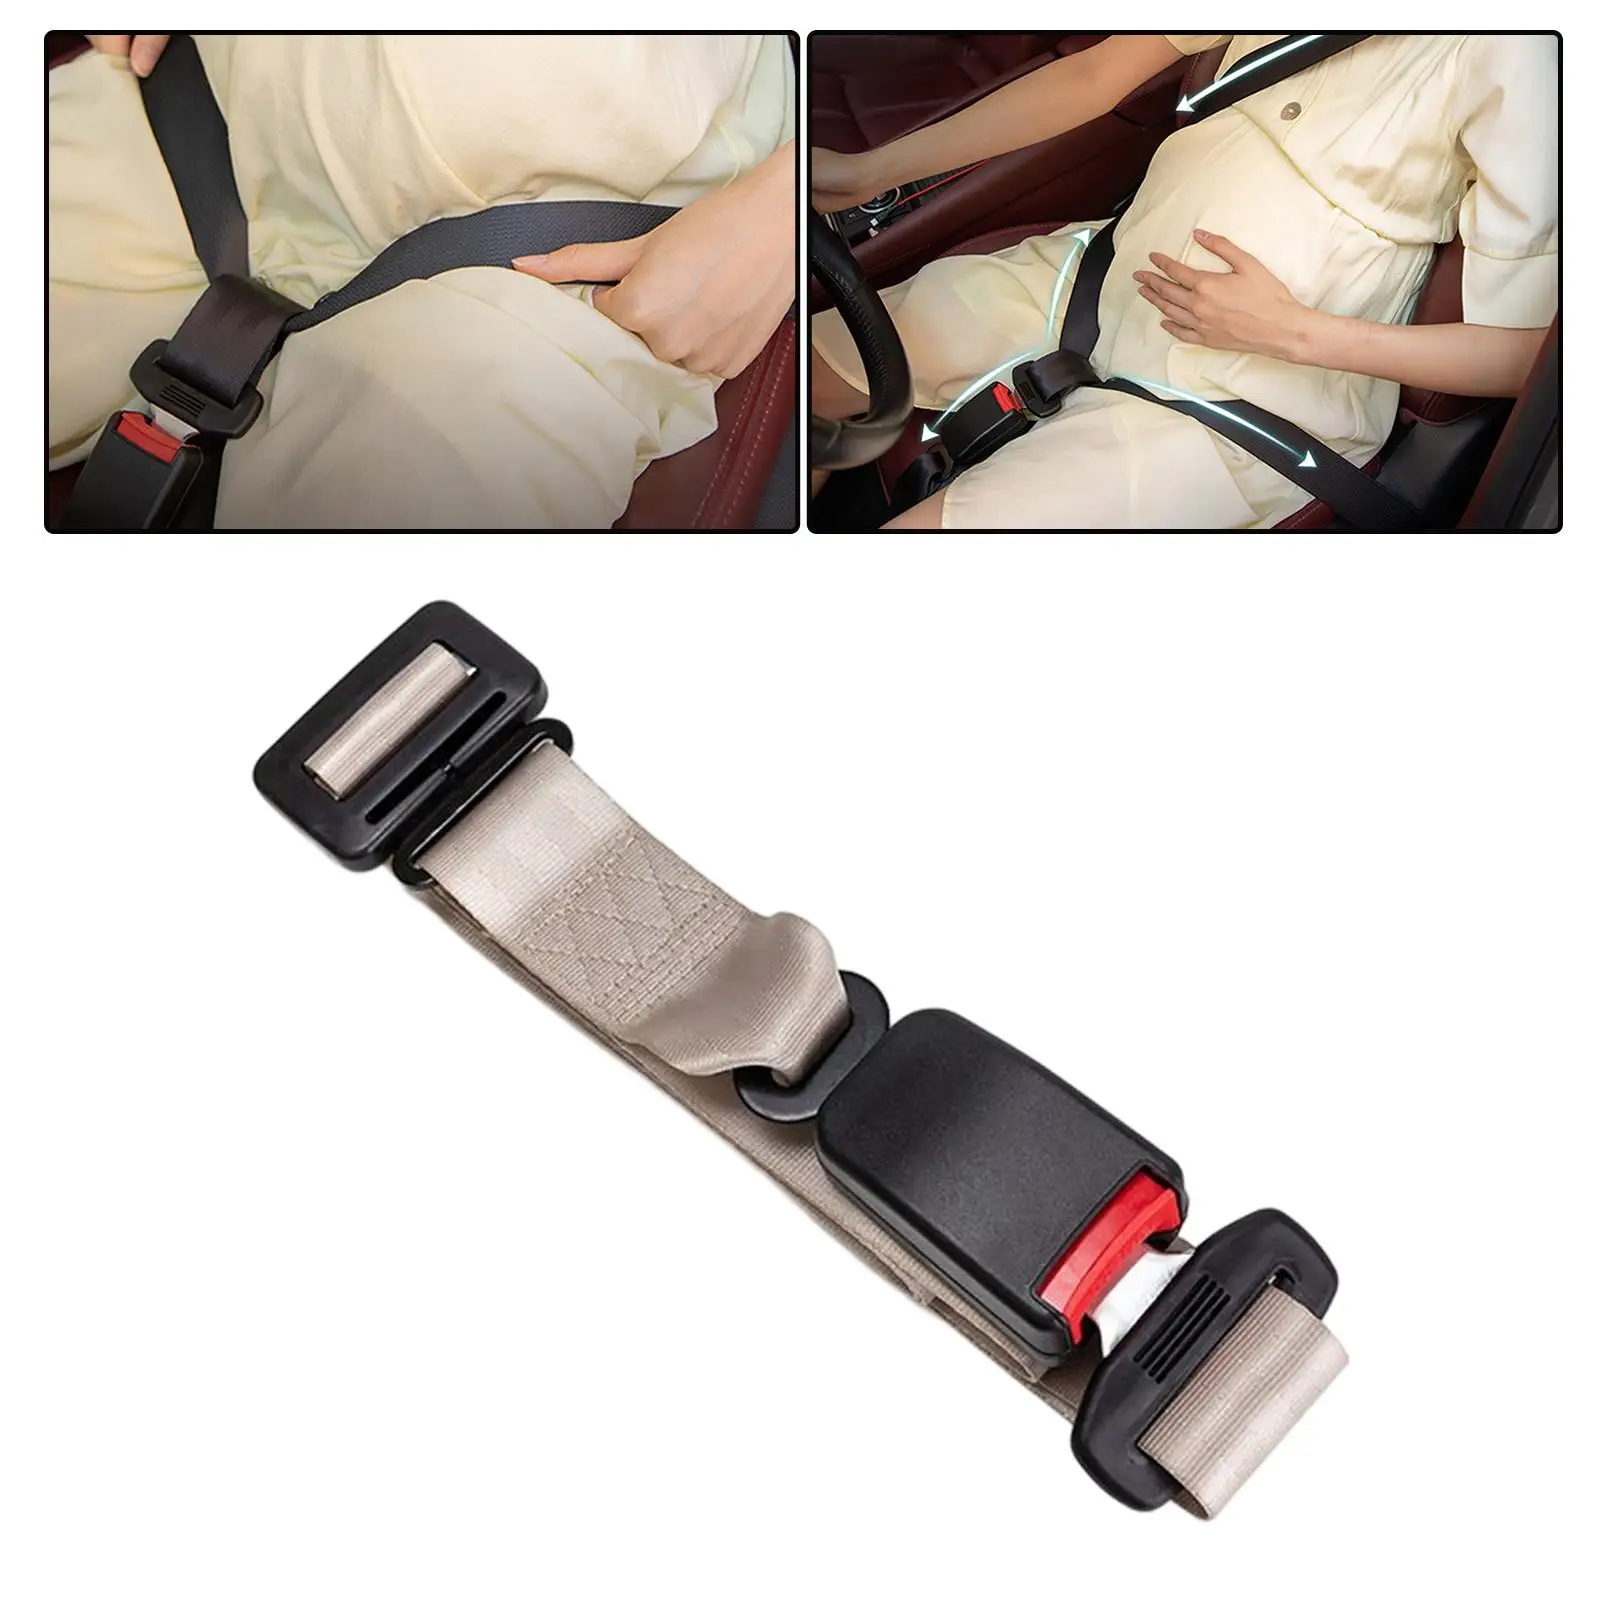 Pregnancy Car Seat Safety Belt Prevent Compression of Abdomen Comfort Accessories Adjuster for Pregnancy Woman